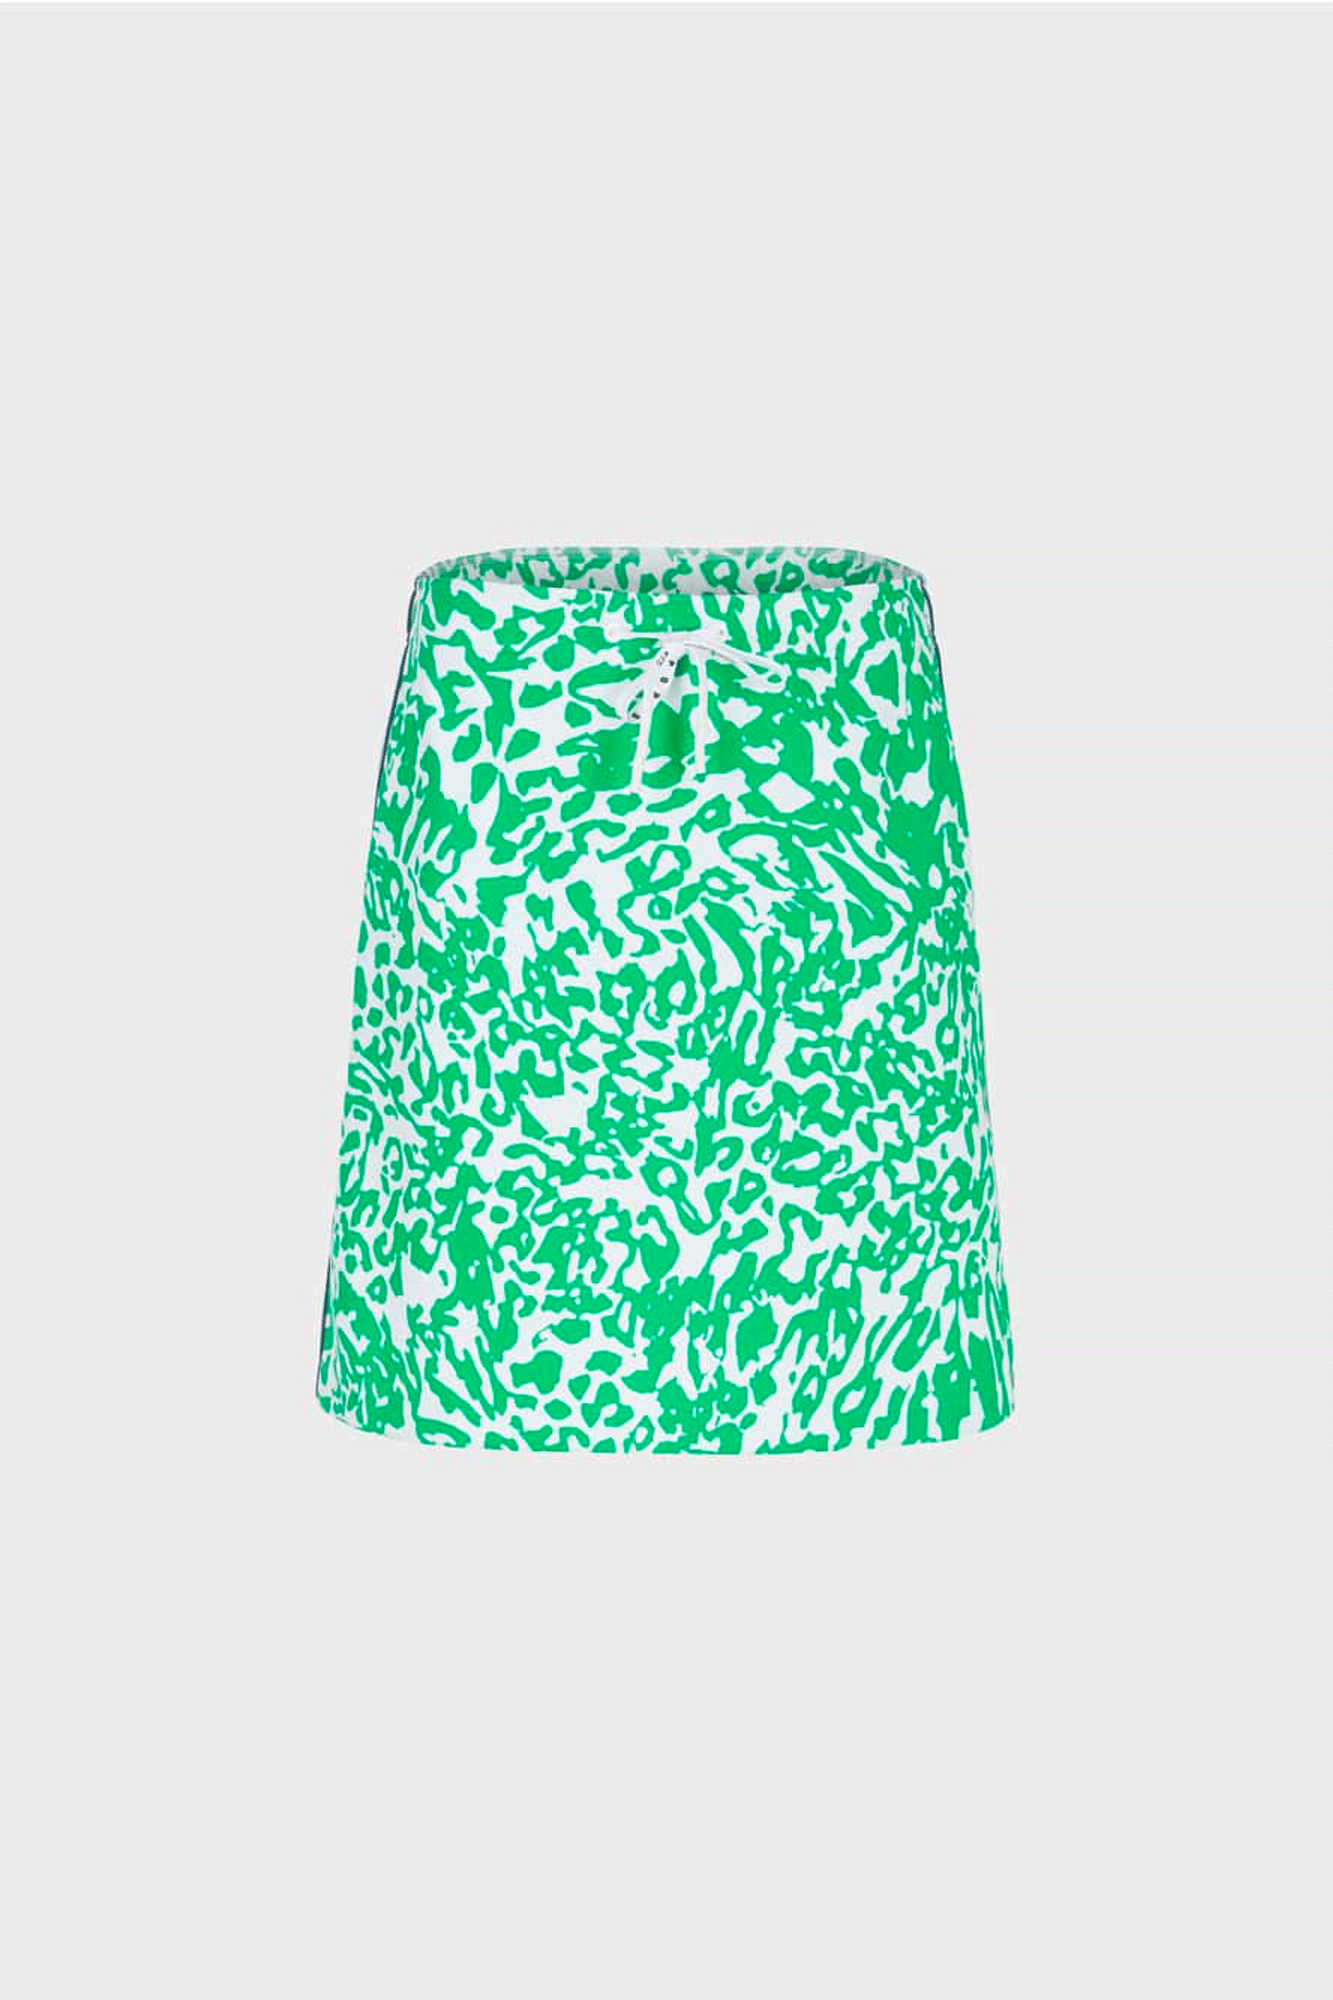 Green Animal Print Skirt